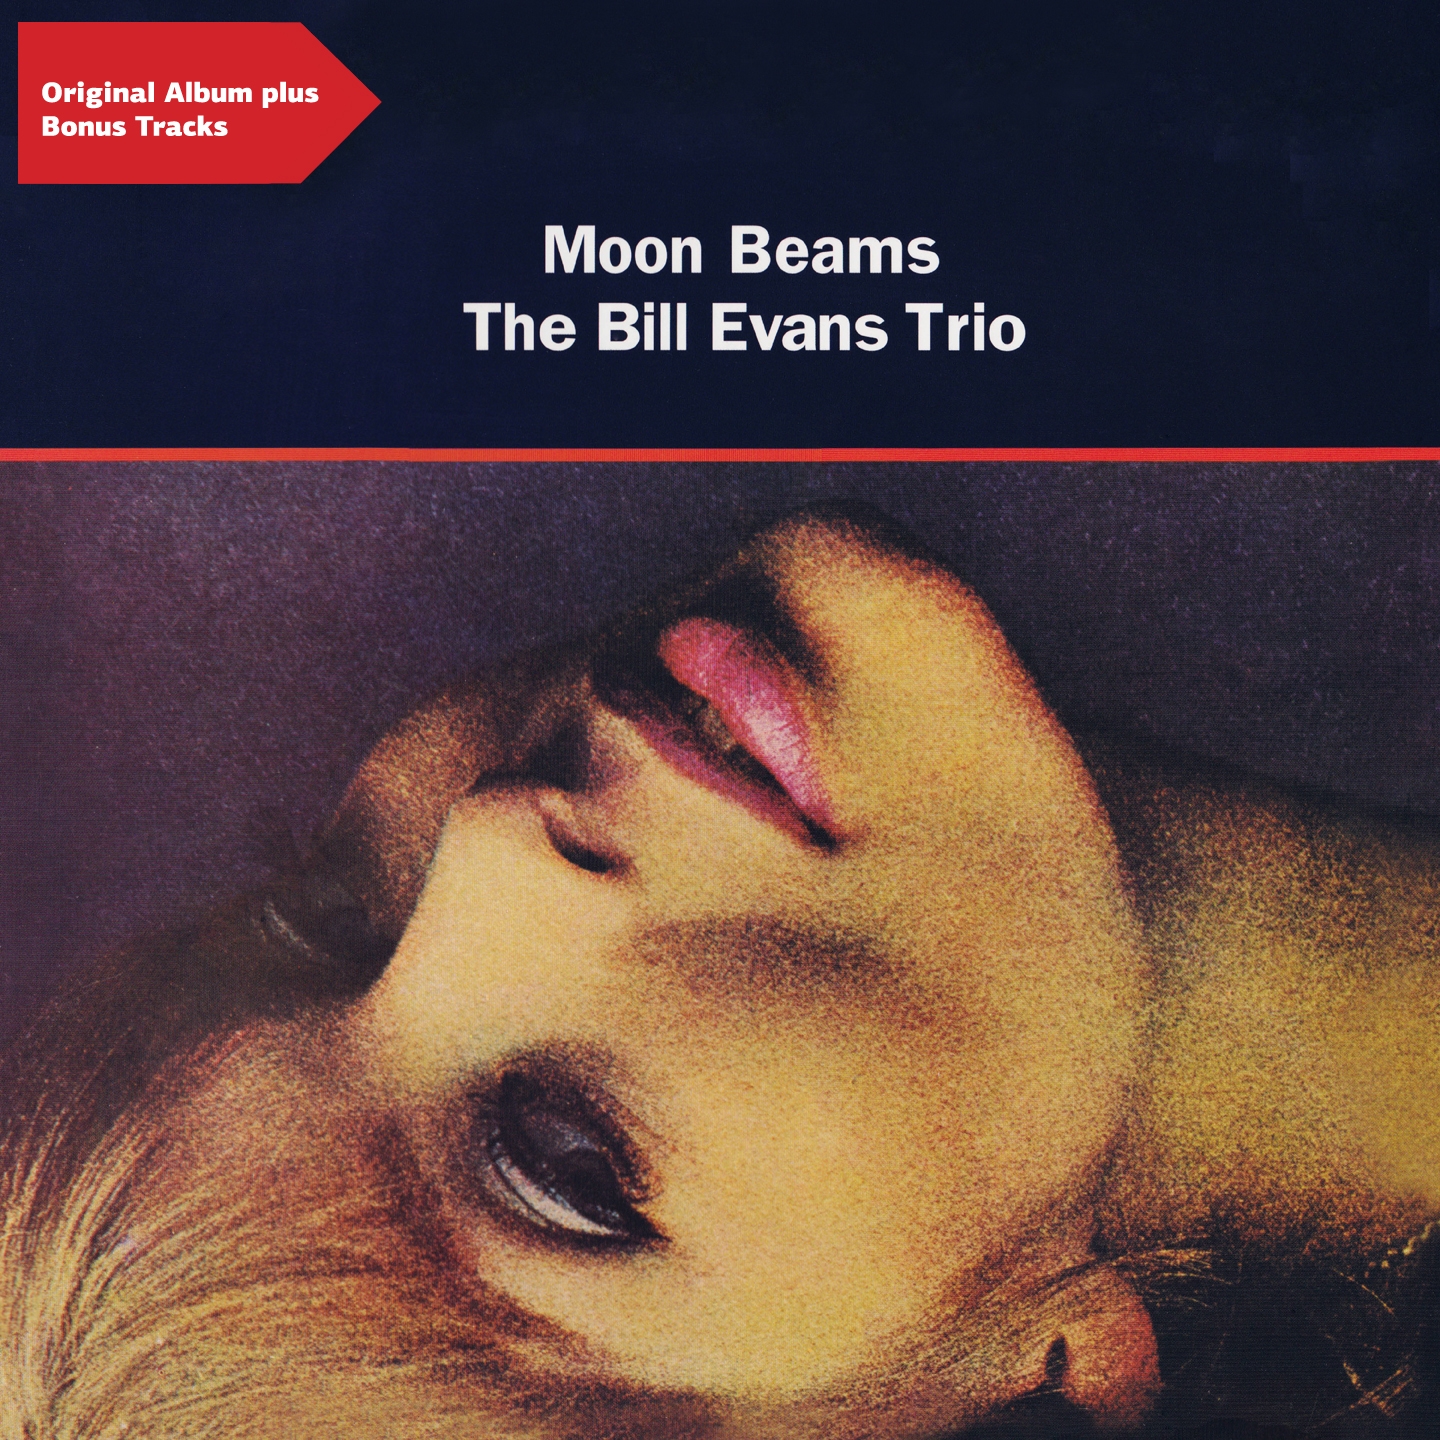 Moon Beams (Original Album plus Bonus Tracks)